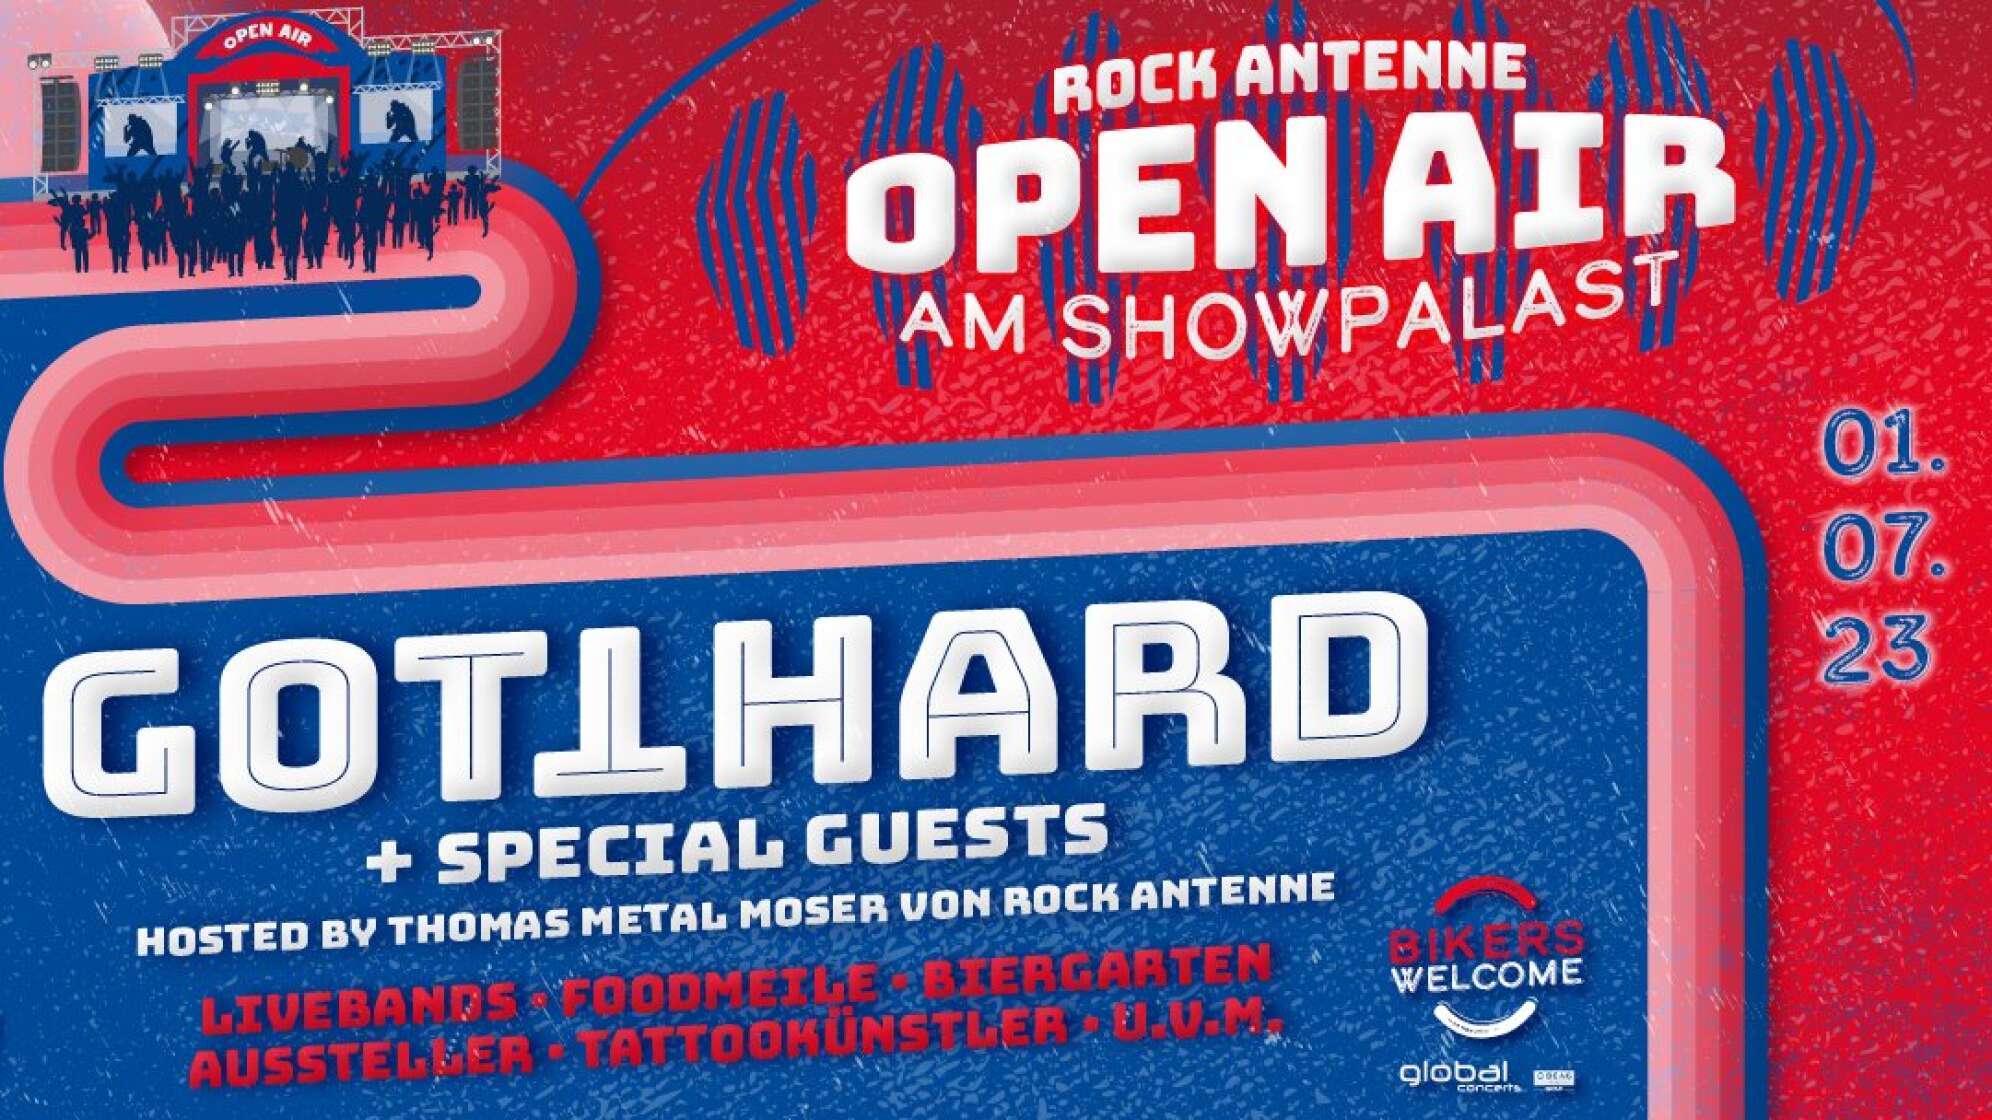 ROCK ANTENNE Open Air am Showpalast in München